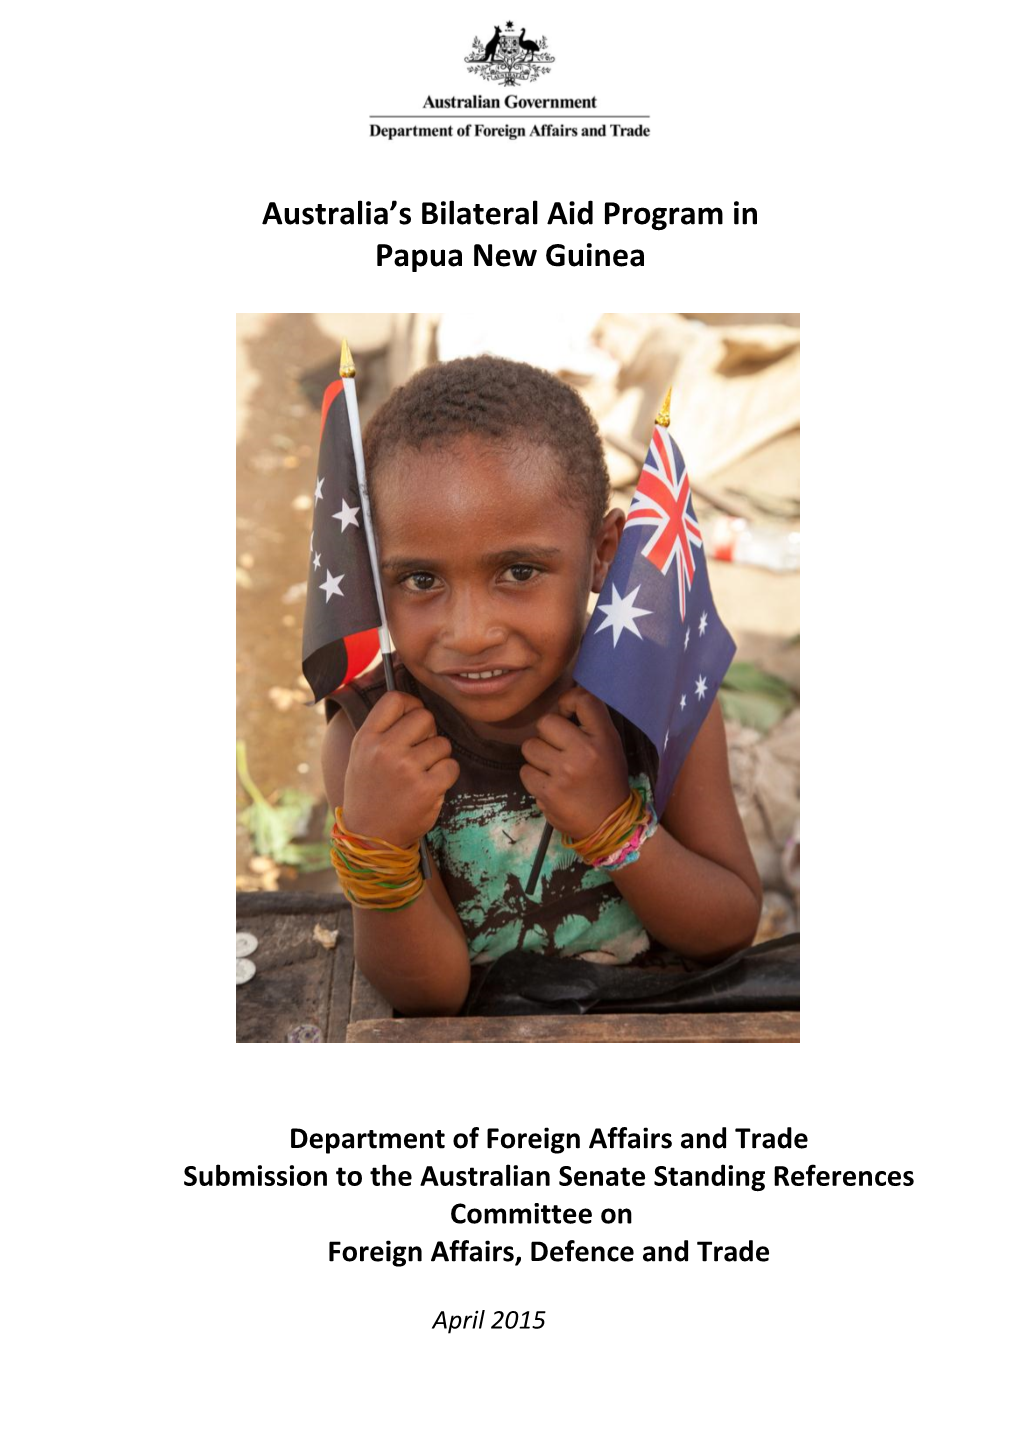 Australia's Bilateral Aid Program in Papua New Guinea